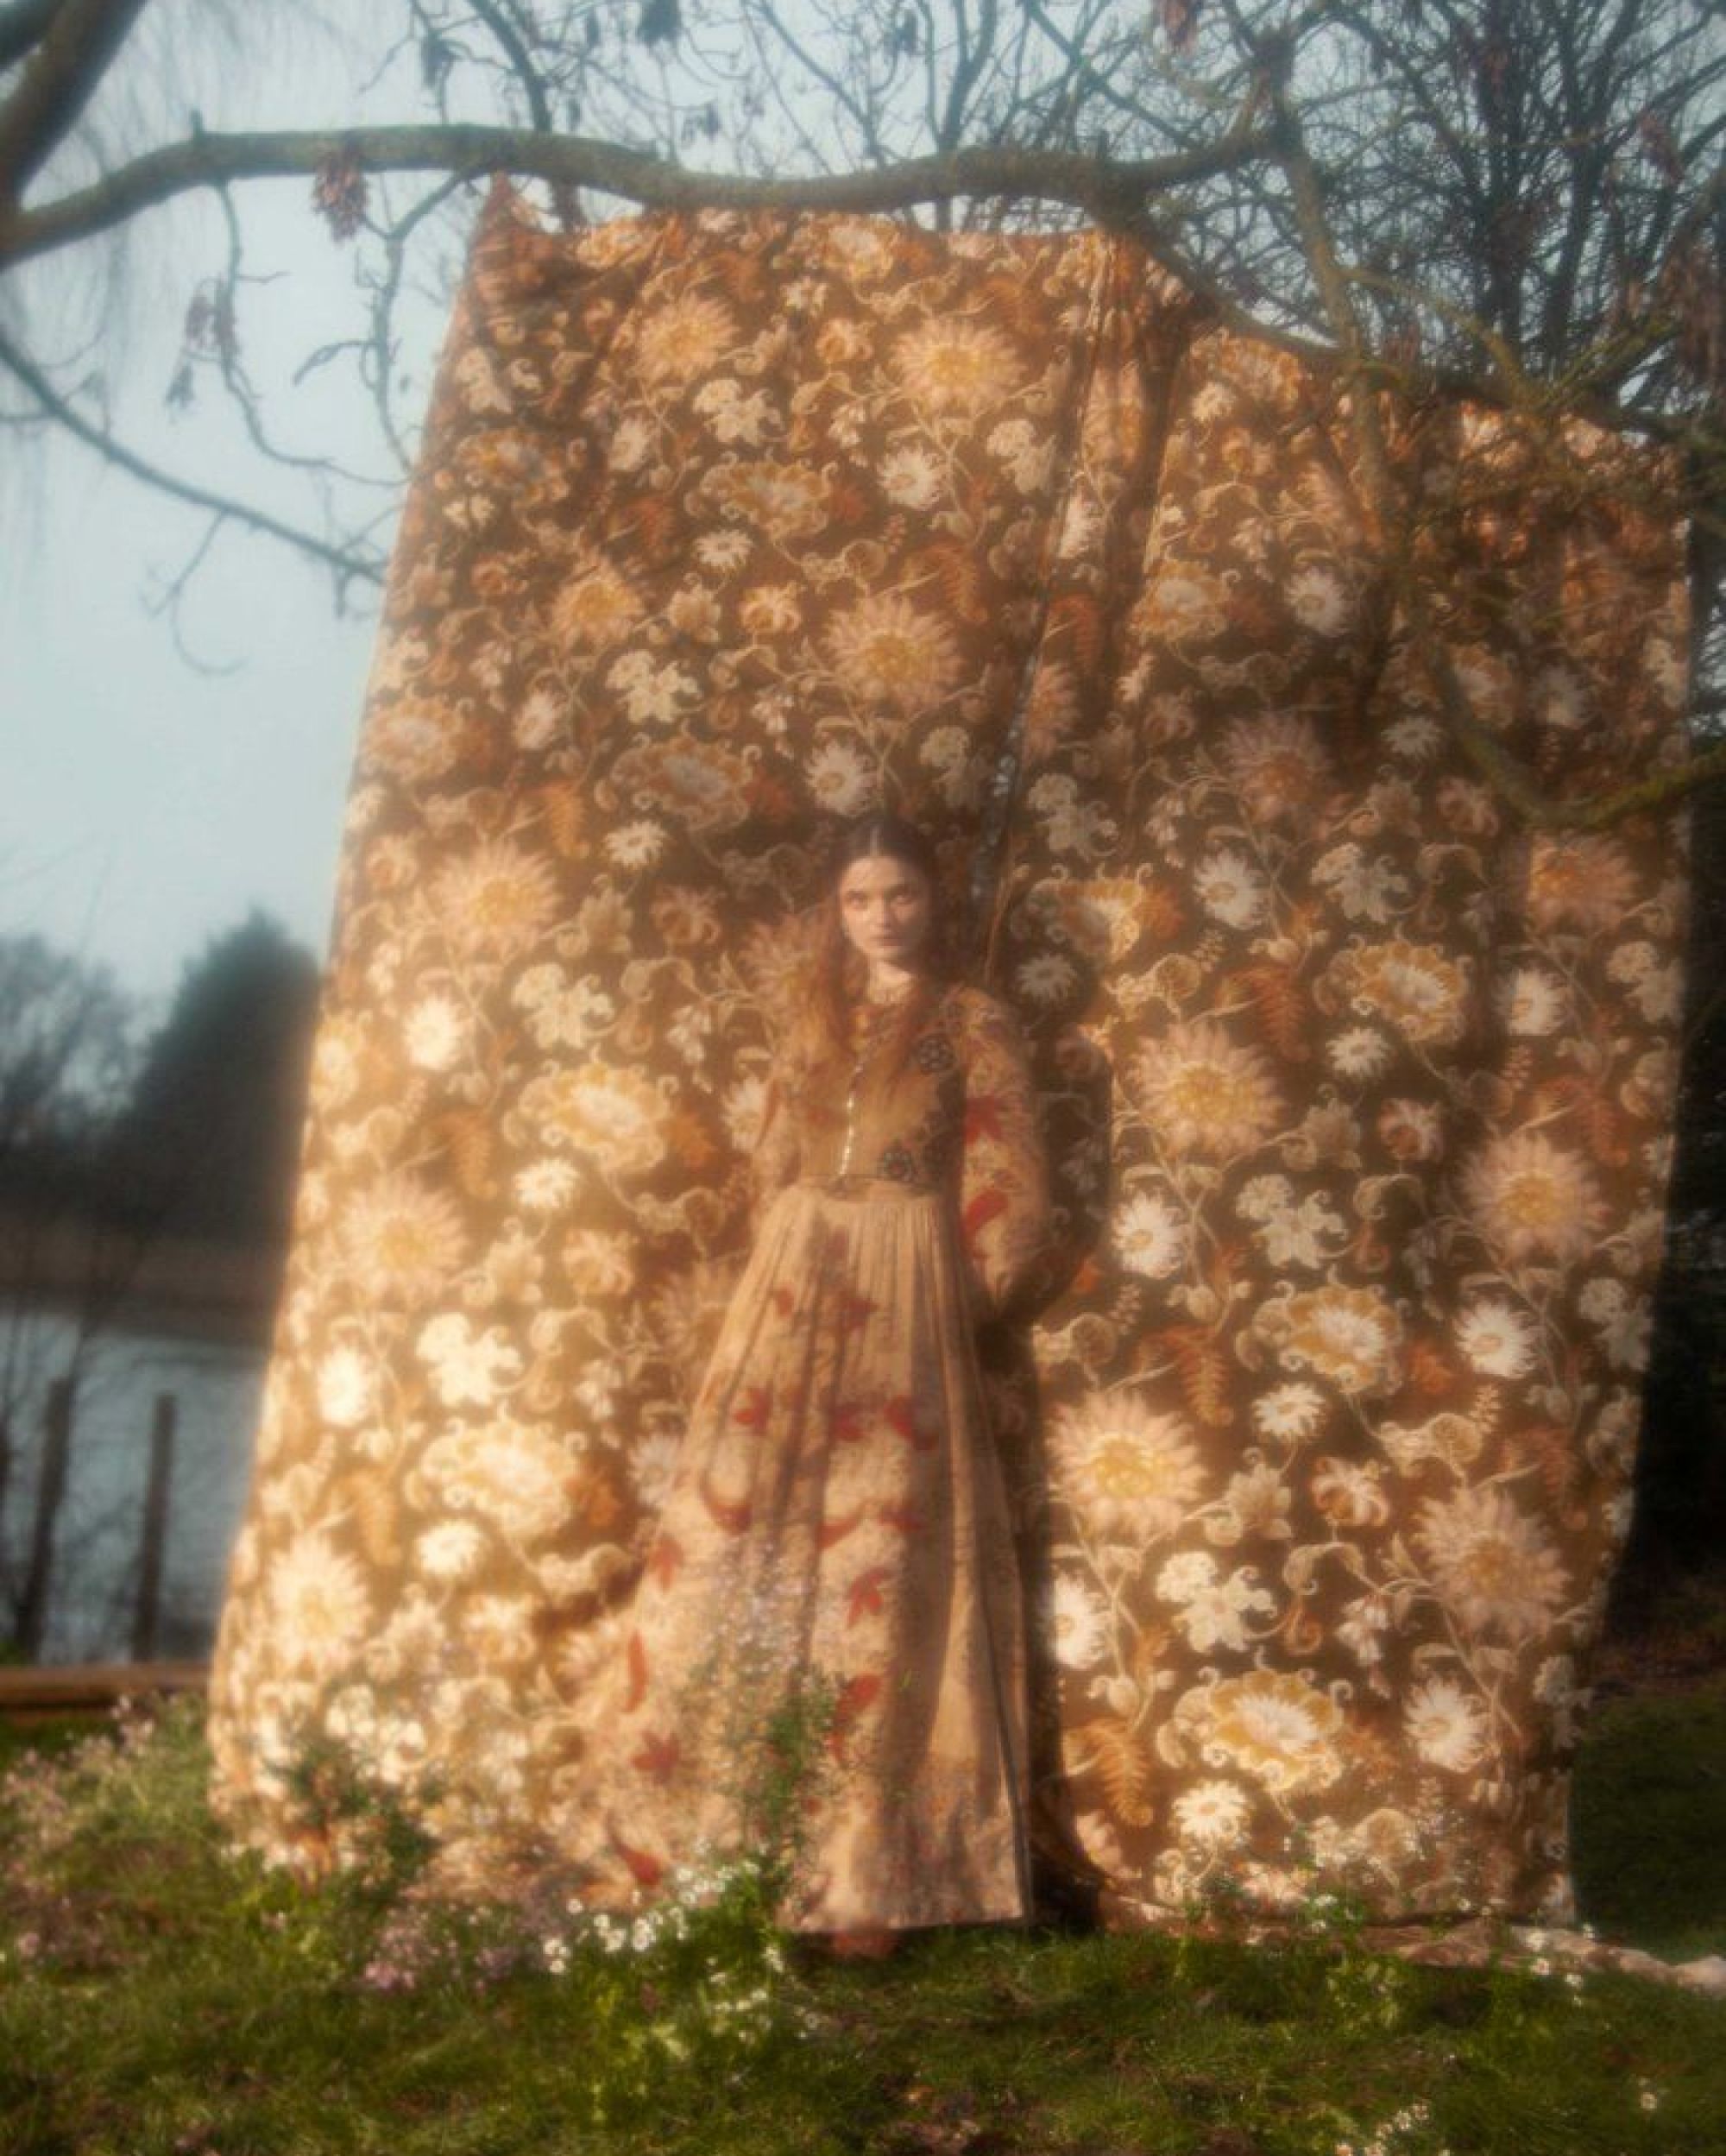 Harper's Bazaar Thumbnail of a woman in front of a flower pattern blanket